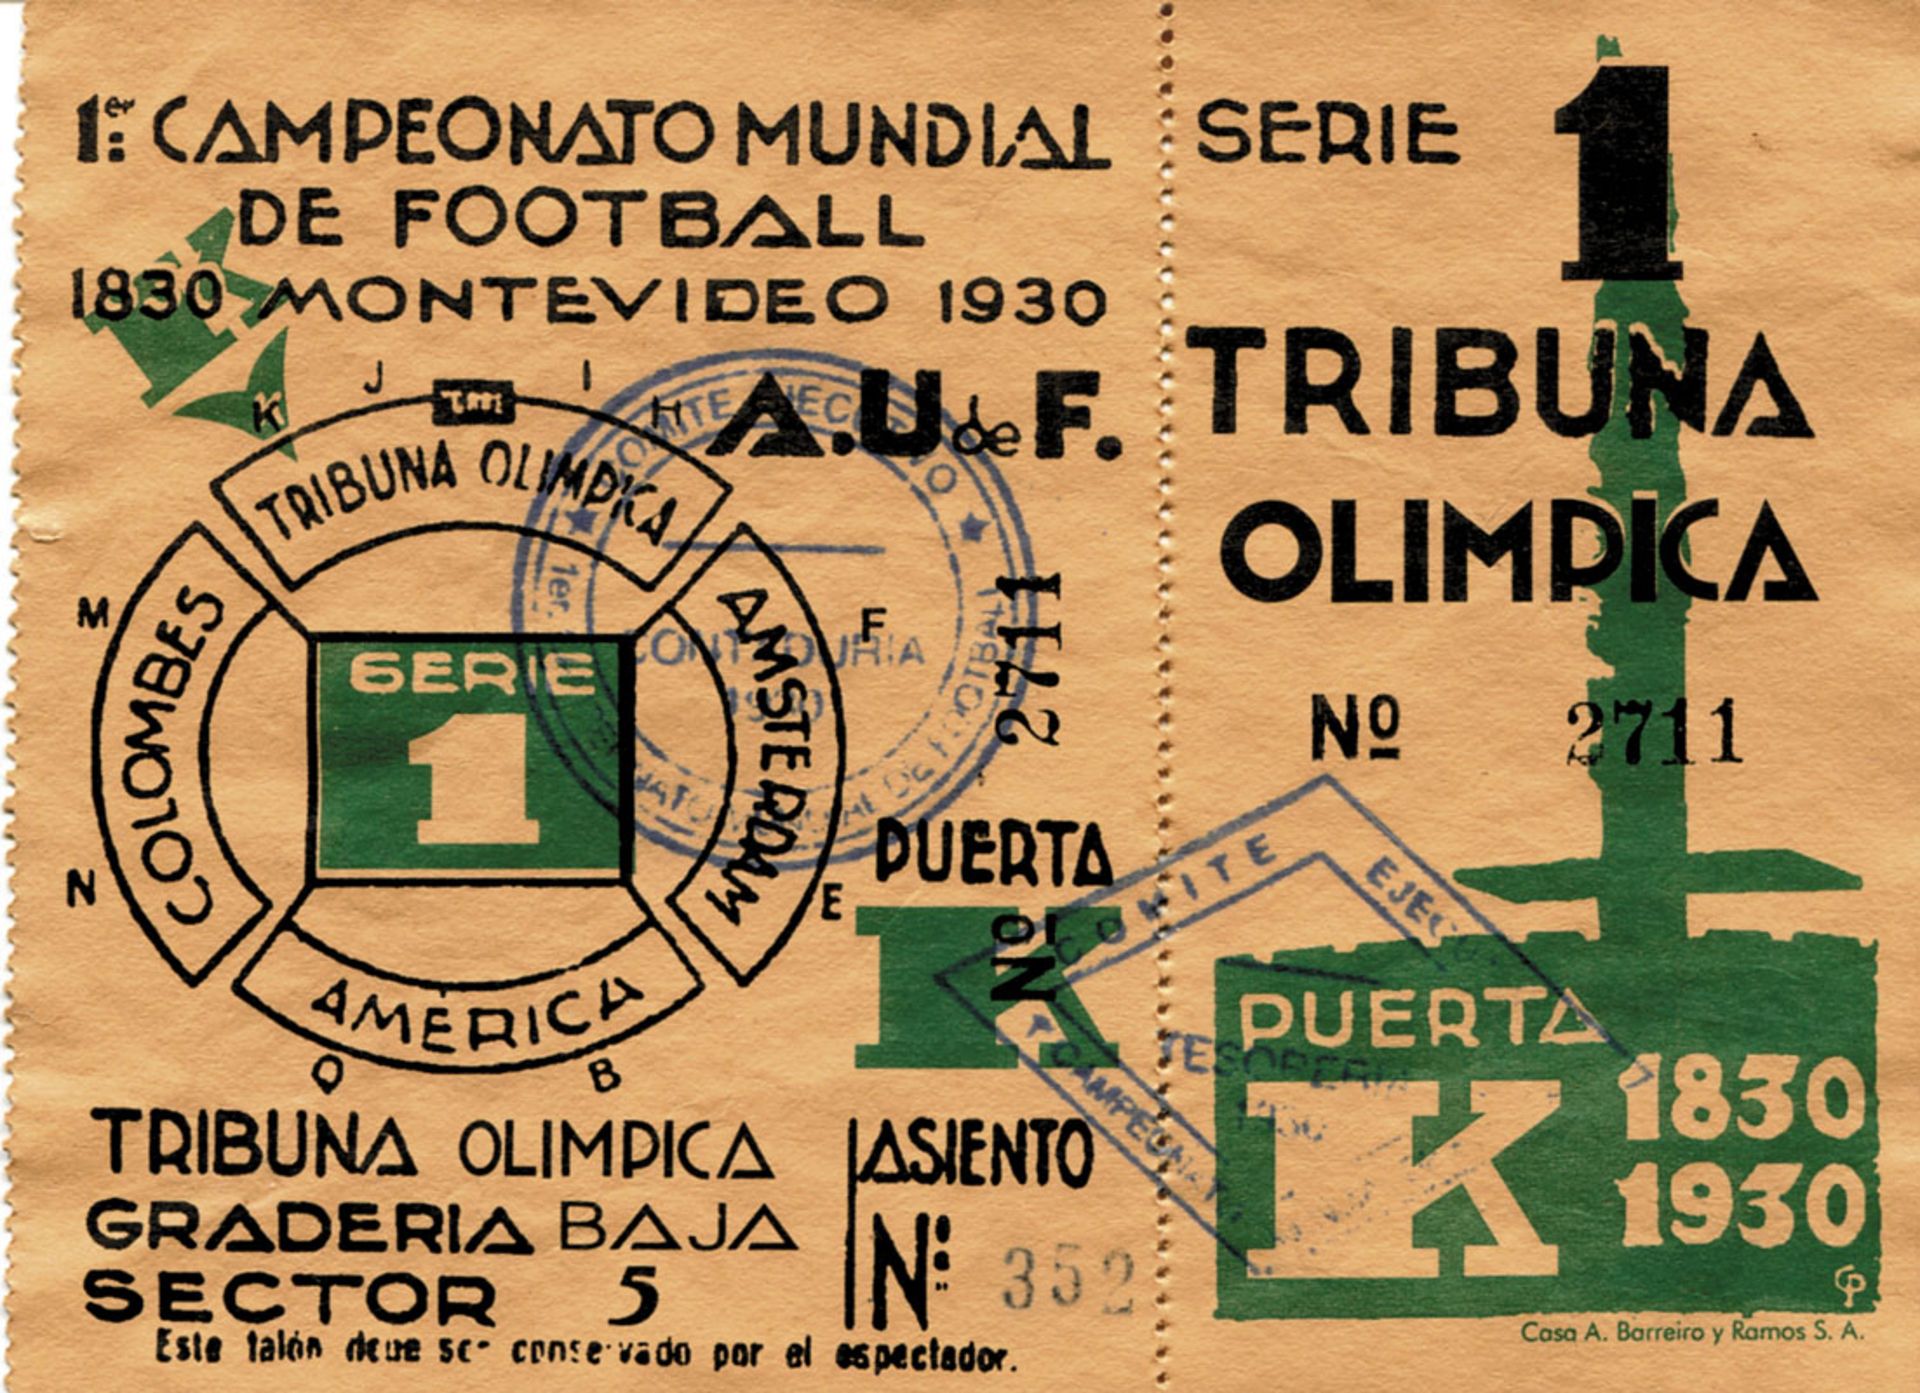 World Cup 1930. Ticket Uruguay v Peru 18th july -  (1-0). "1er Campeonato Mundial Montevideo 1930 Se